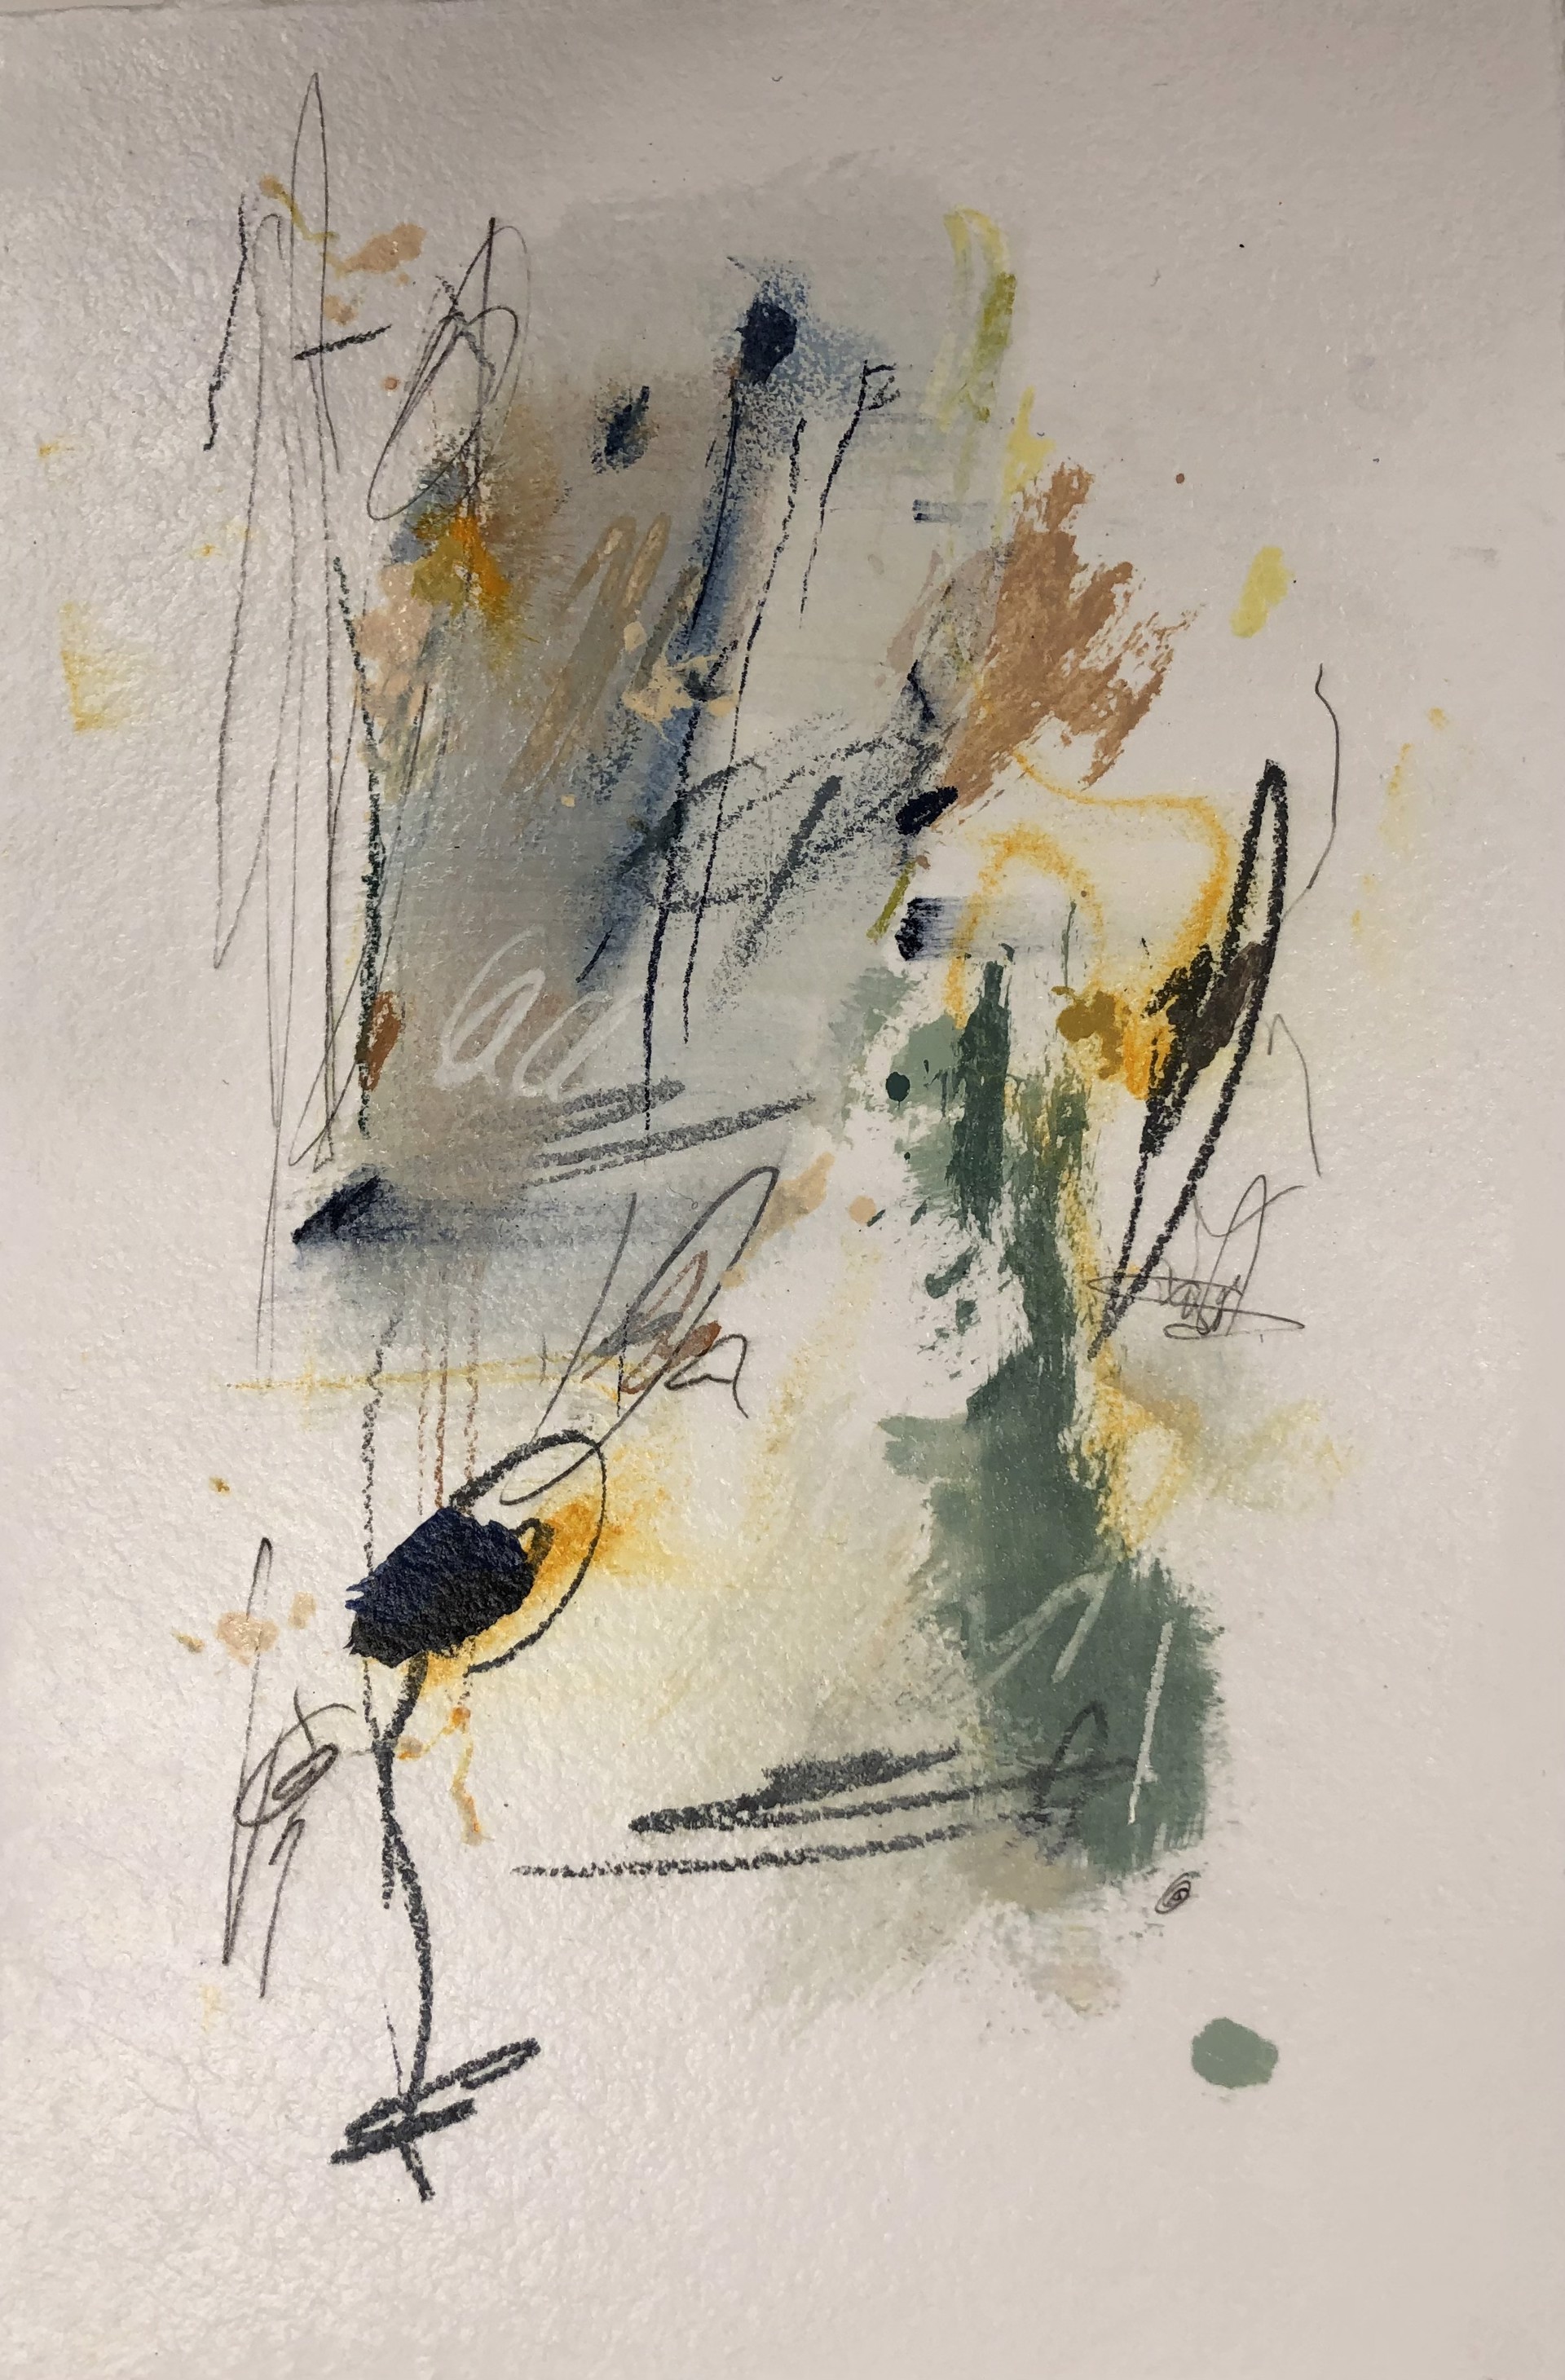 LADY BIRD by Michael J. Cisarik